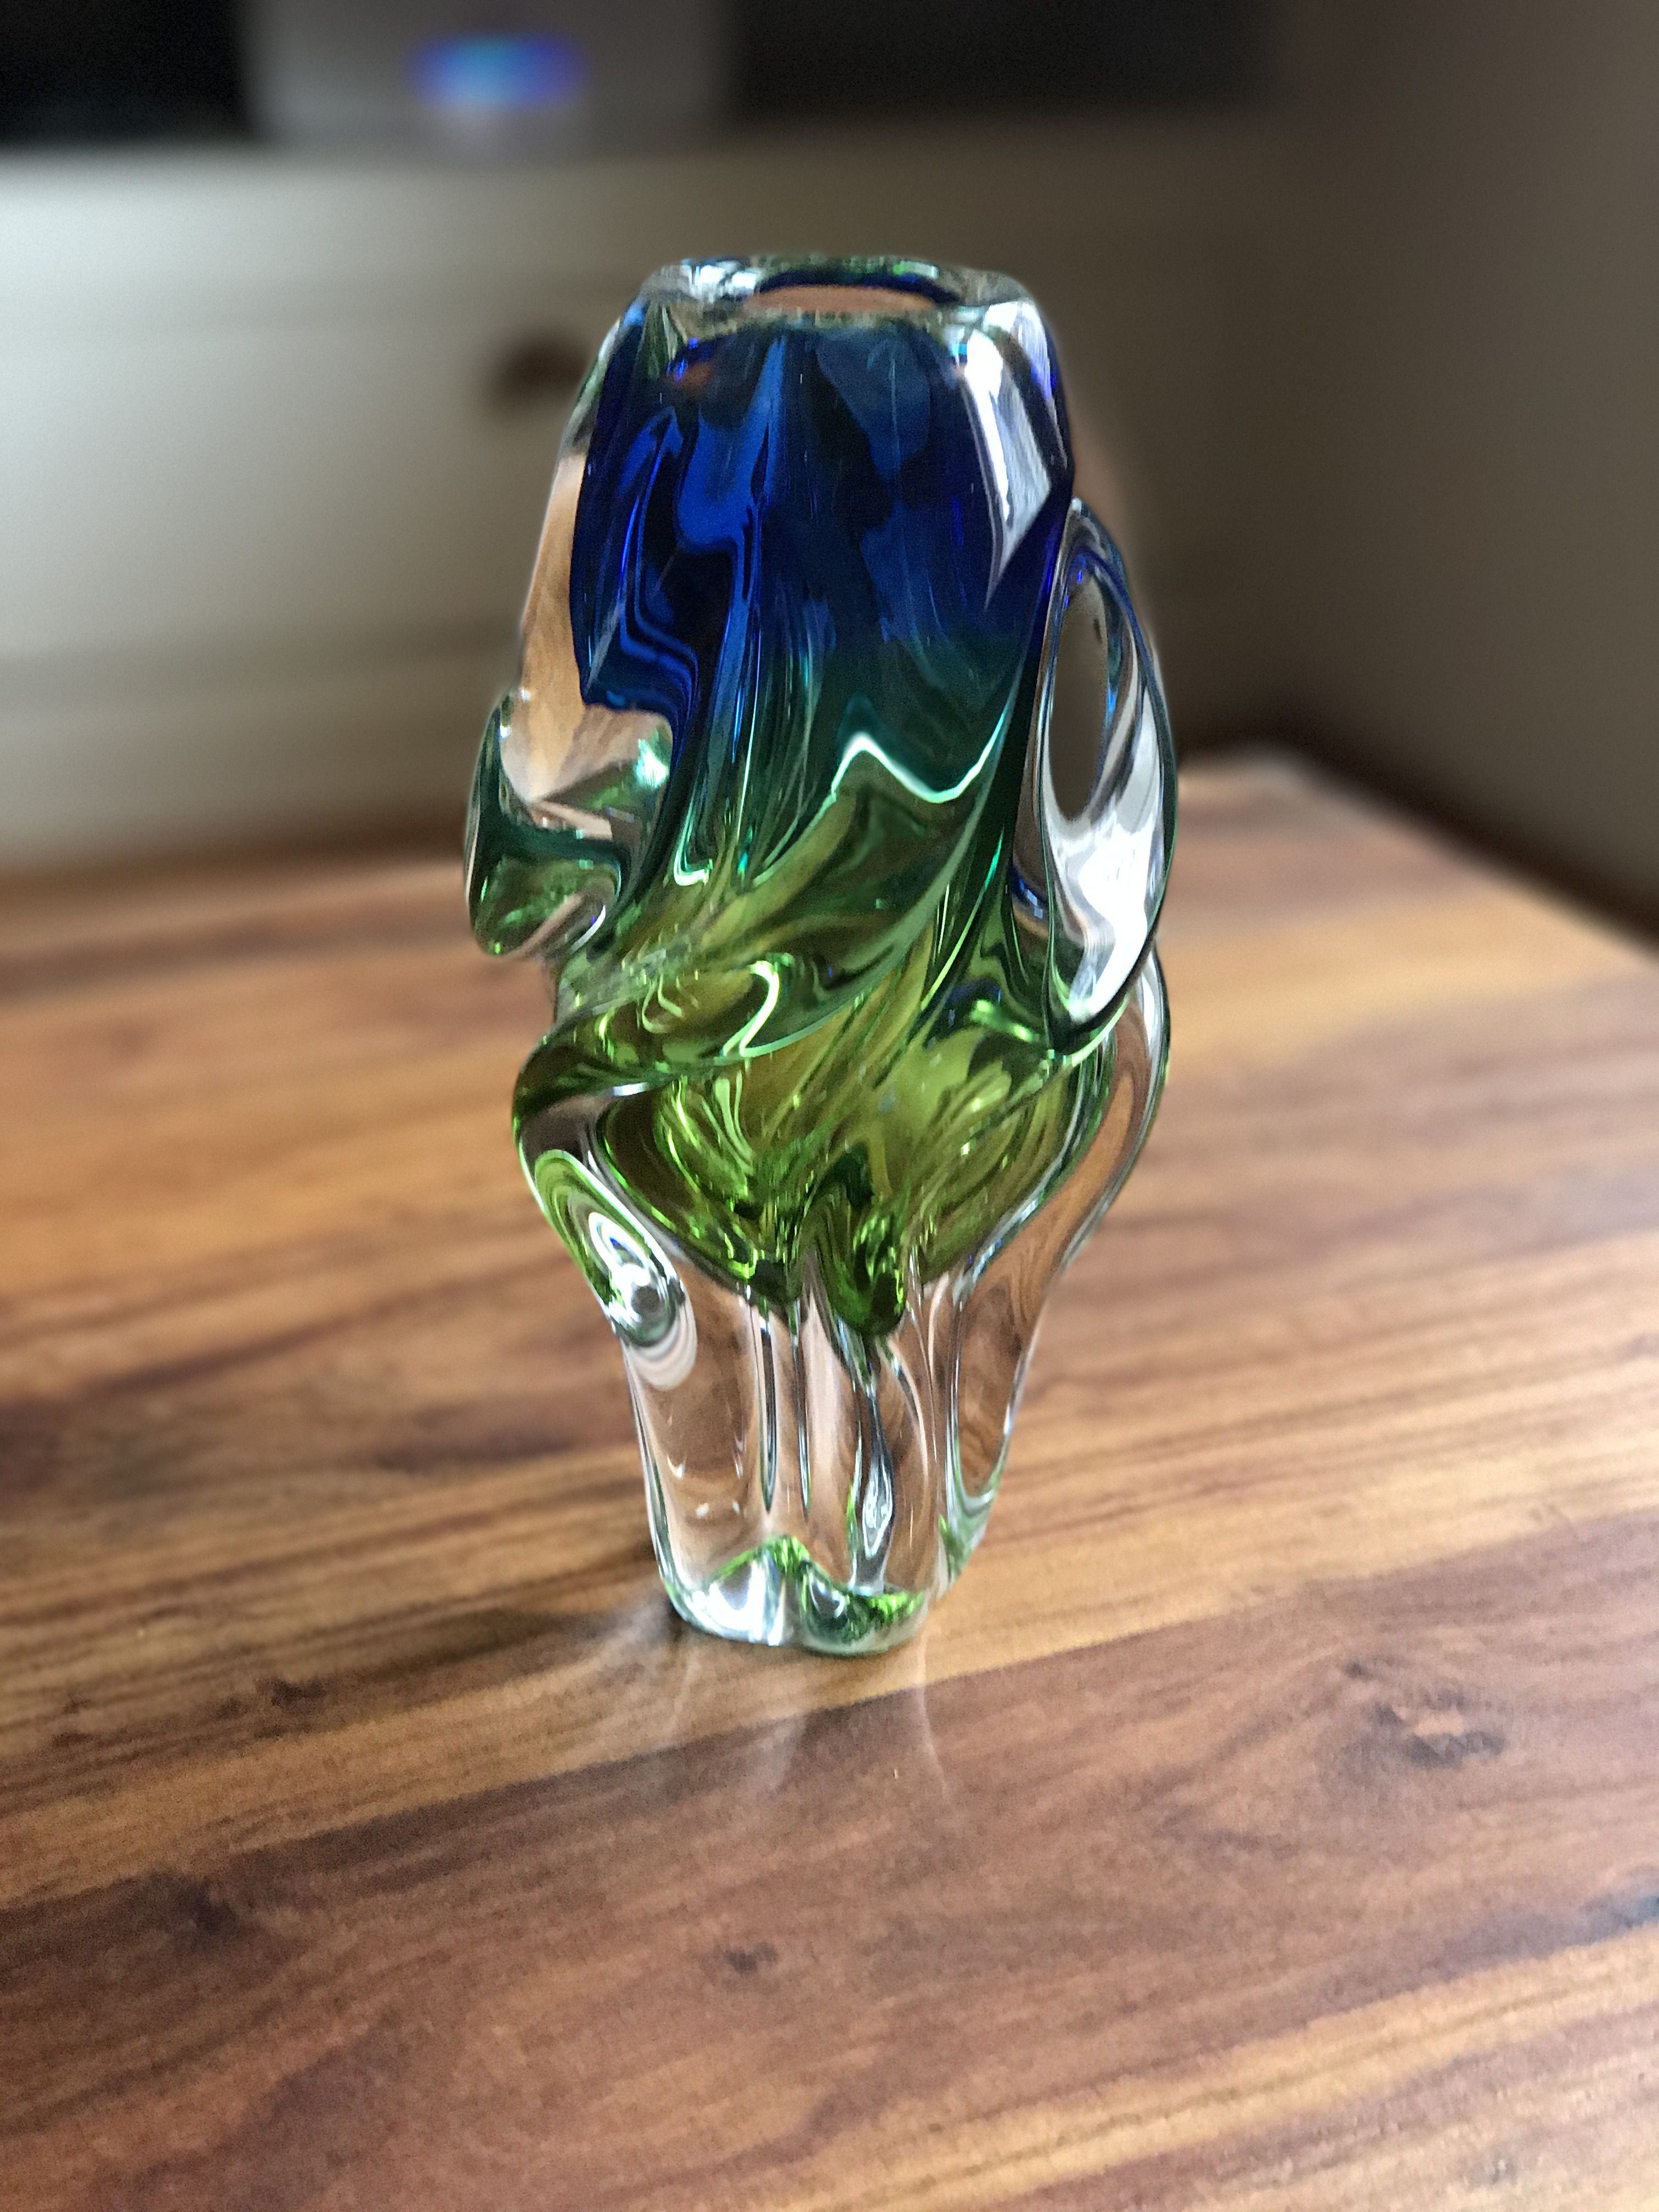 bohemia crystal flower vase of chribska designed by josef hospodka czech art glass bohemia twisted for chribska designed by josef hospodka czech art glass bohemia twisted vase blue and green